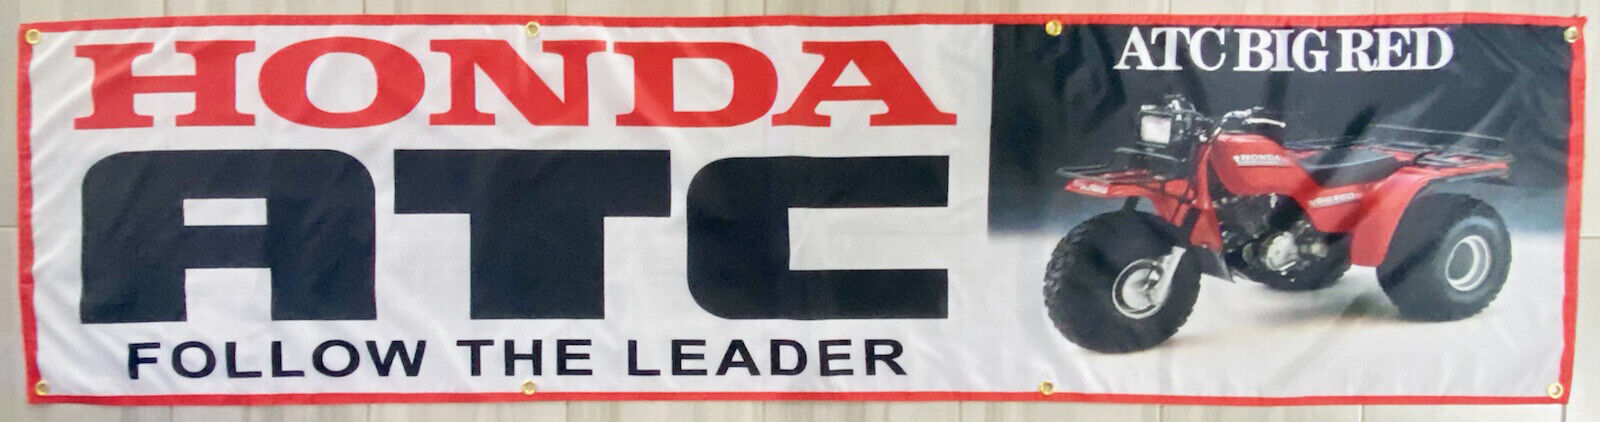 Honda BIG RED 250 S ATC FLAG 2x8 feet BANNER FLAG MAN CAVE GARAGE 3 Wheeler